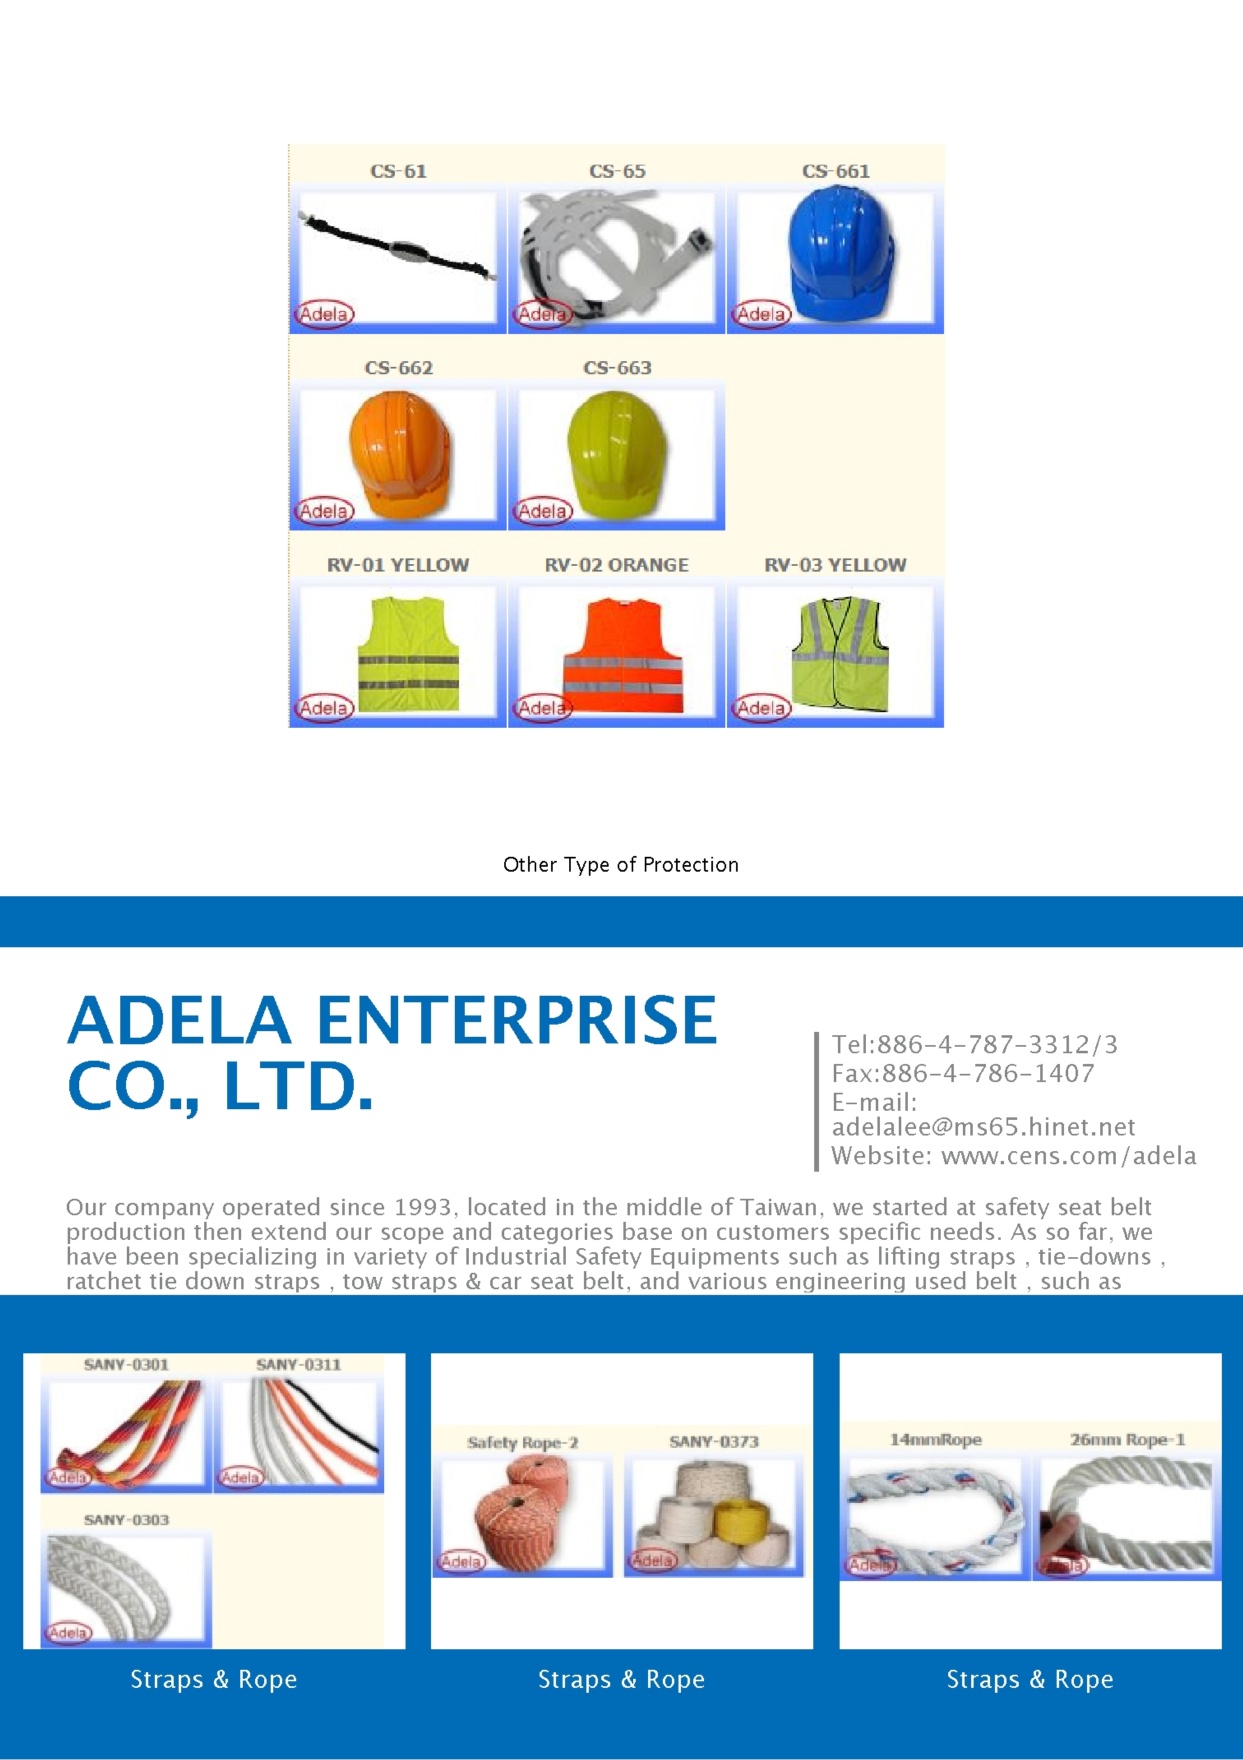 ADELA ENTERPRISE CO., LTD.